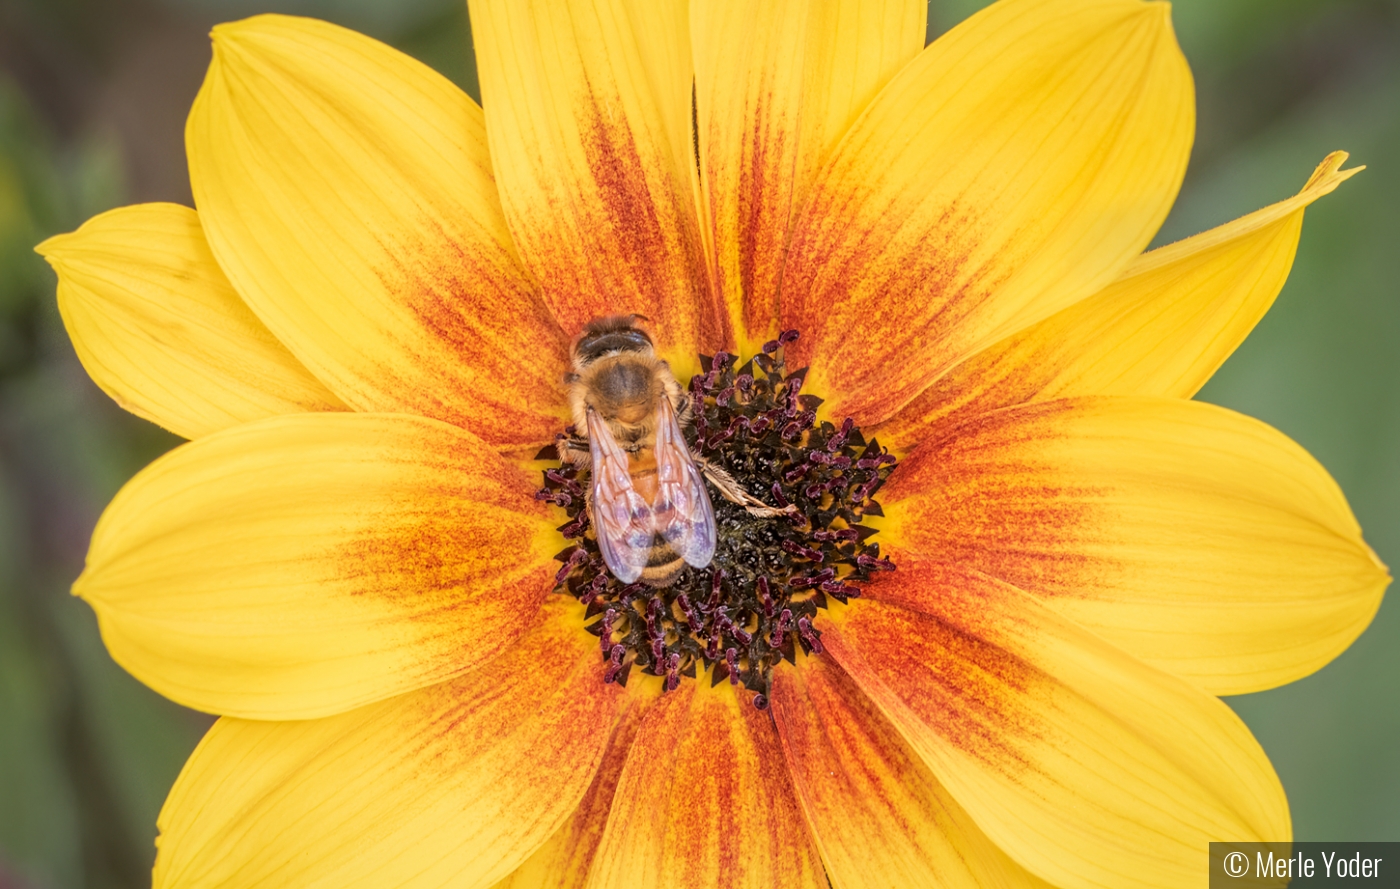 Honey bee heaven by Merle Yoder